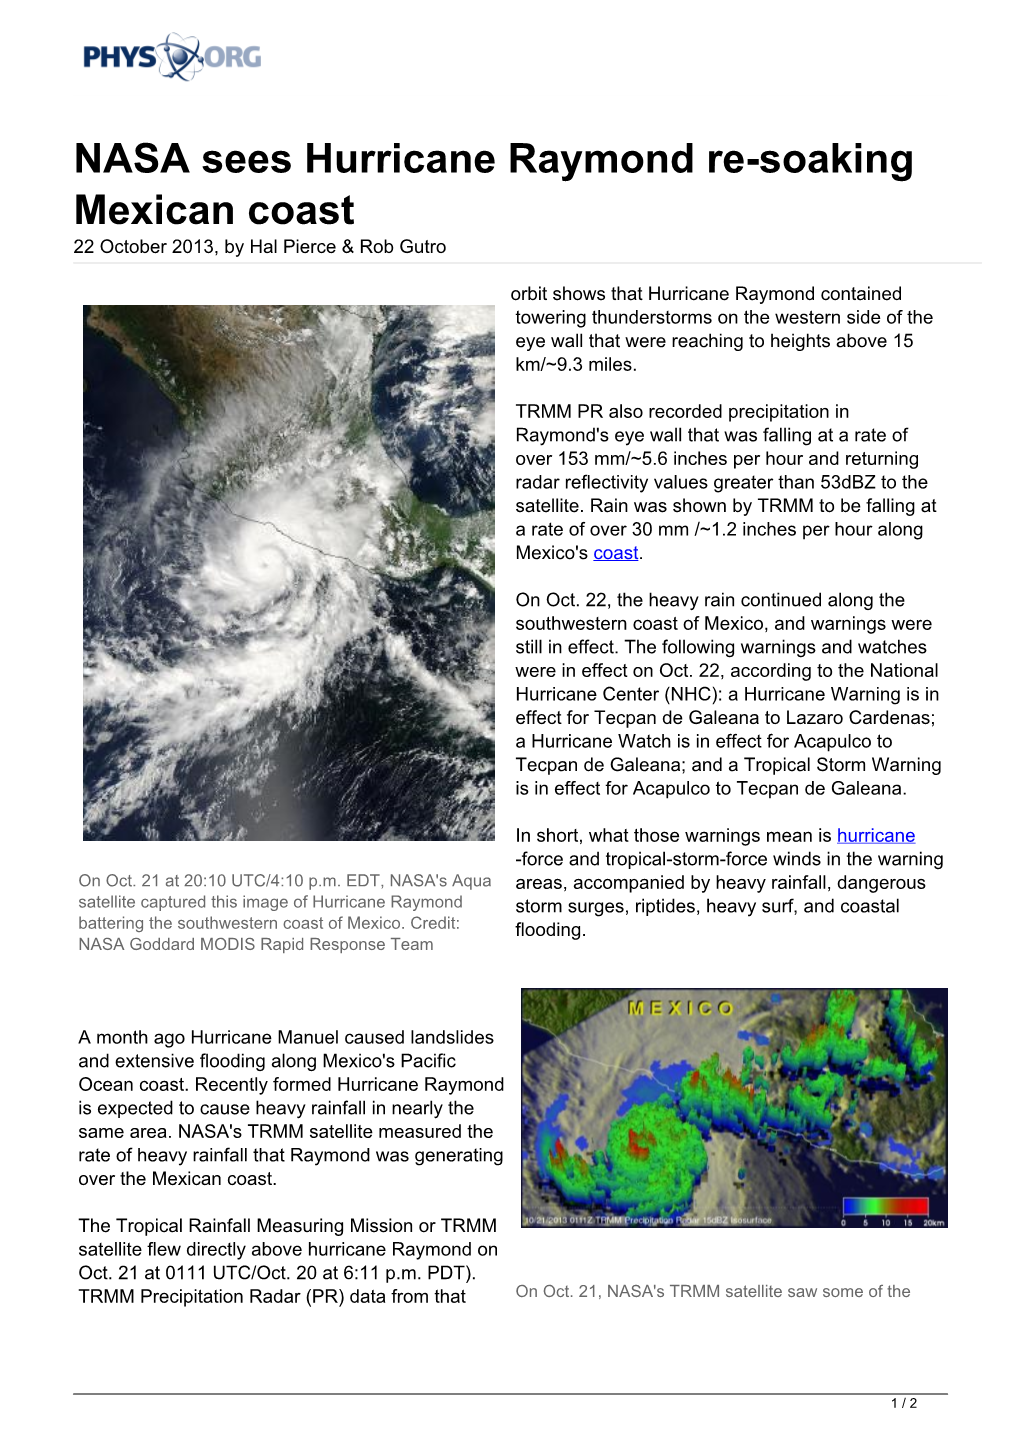 NASA Sees Hurricane Raymond Re-Soaking Mexican Coast 22 October 2013, by Hal Pierce & Rob Gutro